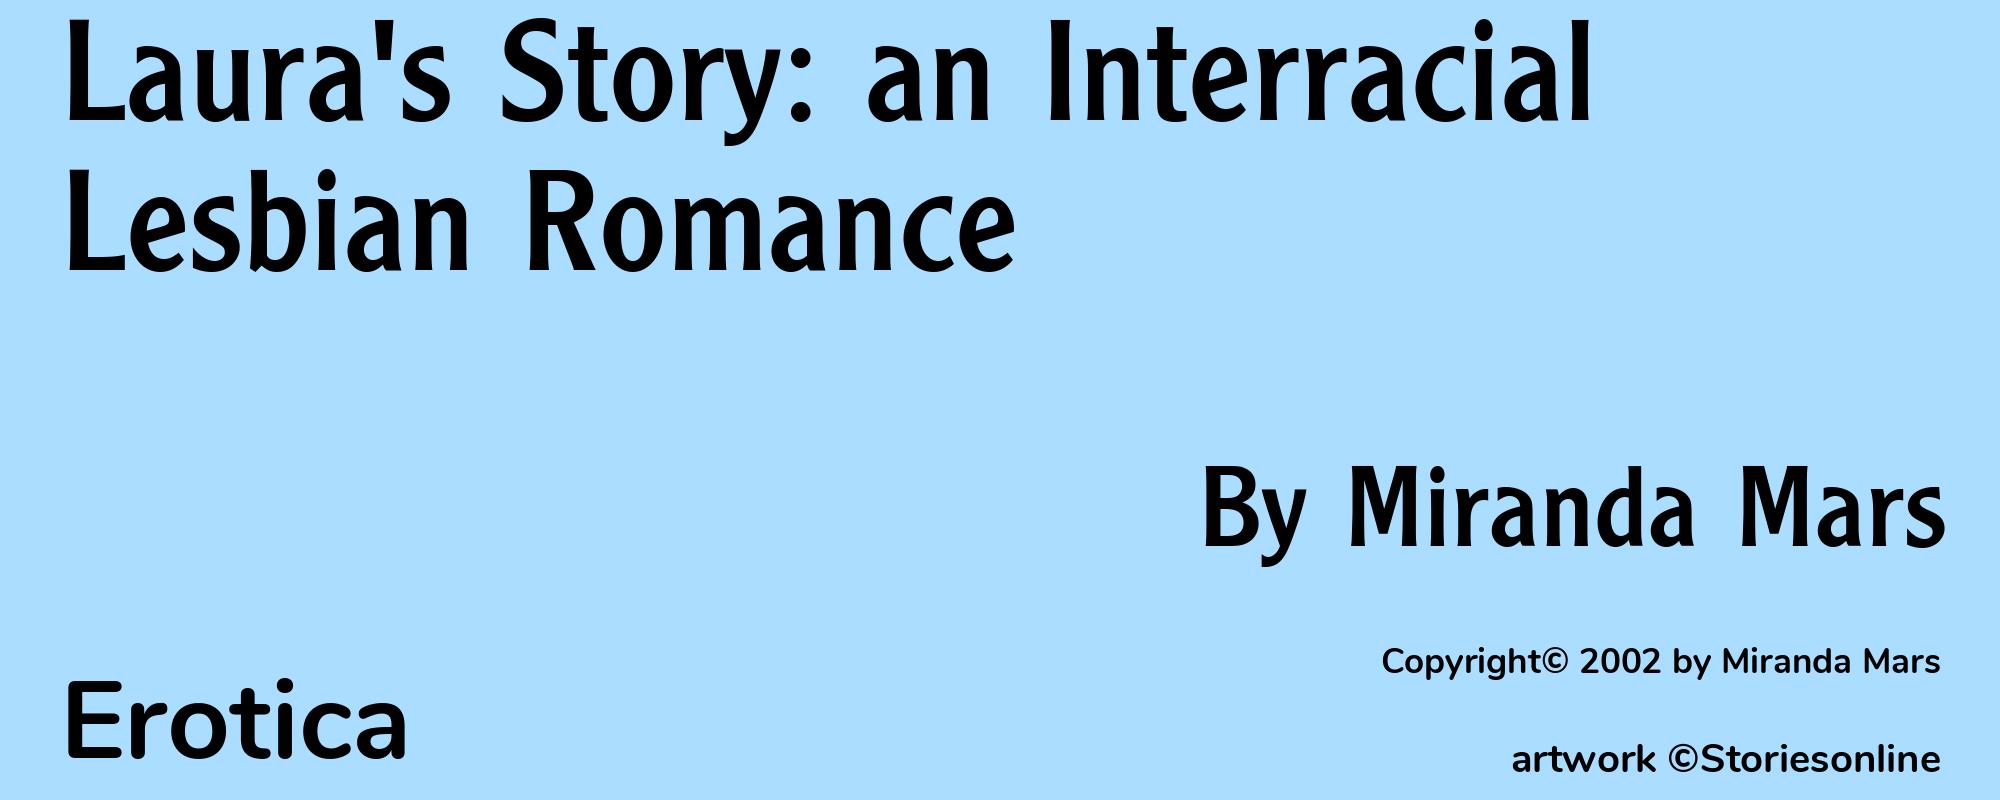 Laura's Story: an Interracial Lesbian Romance - Cover